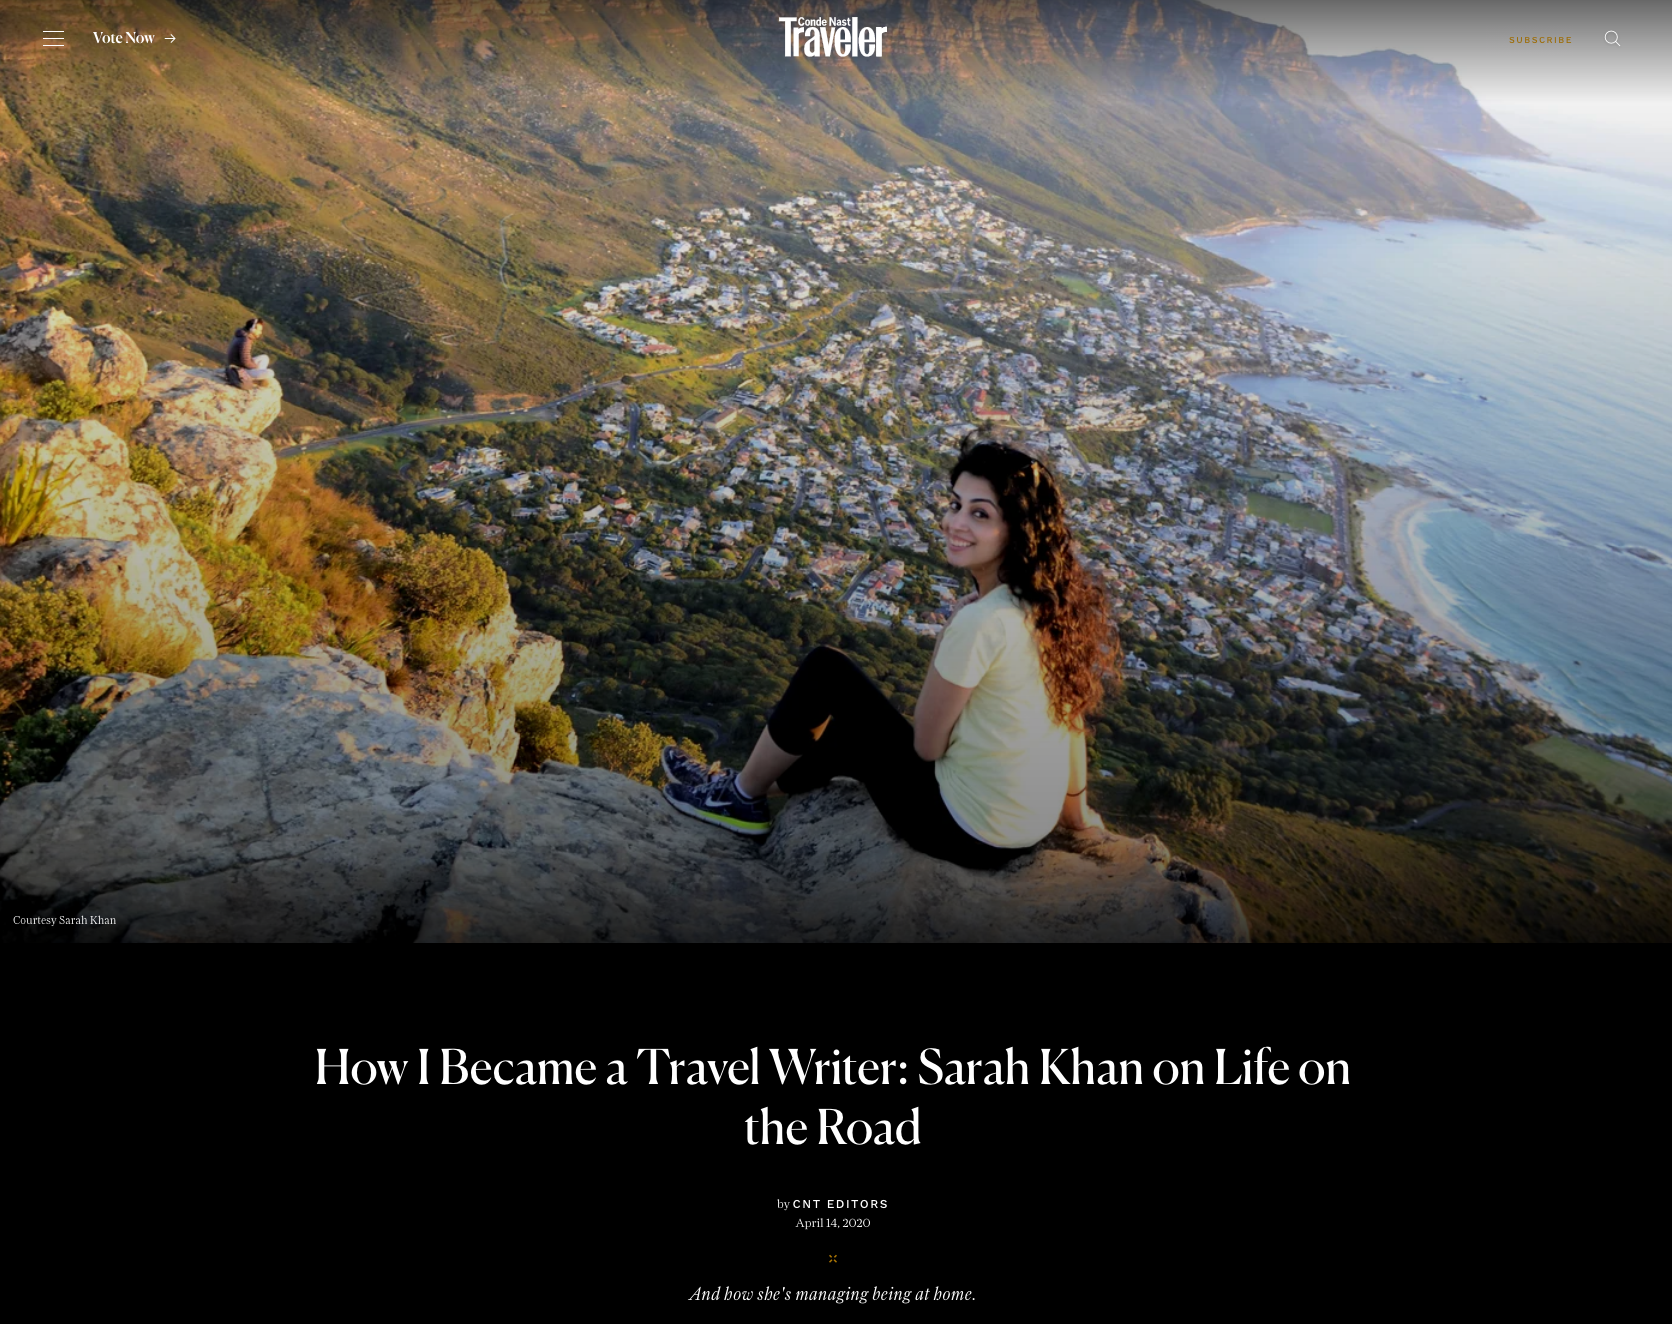 Condé Nast Traveler: How I Became a Travel Writer – Sarah Khan on Life on the Road